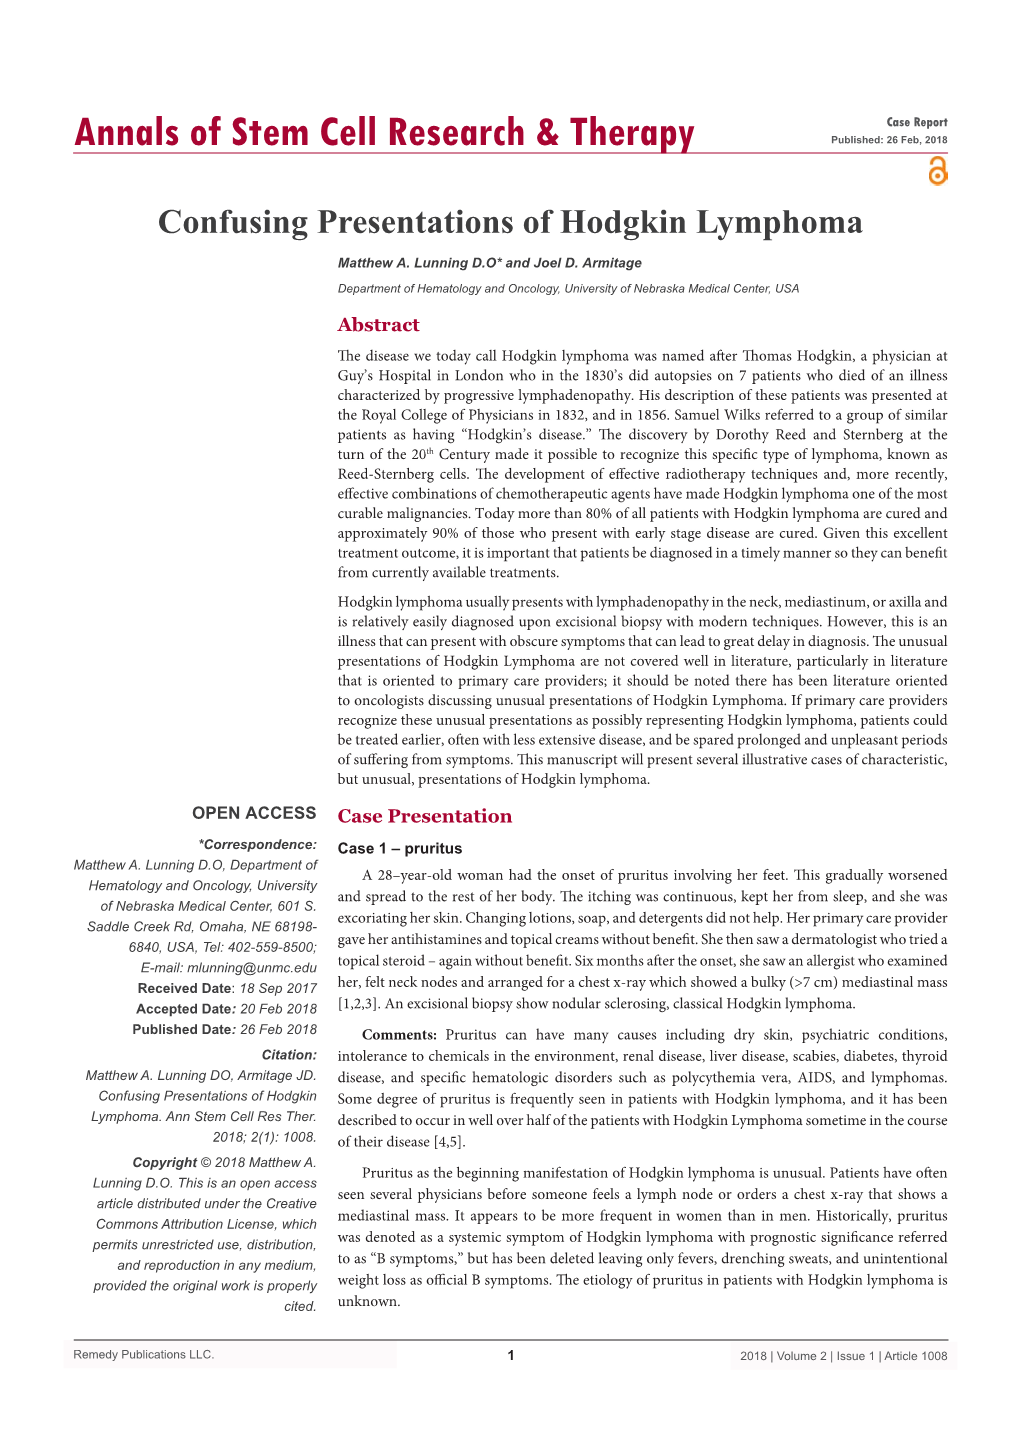 Confusing Presentations of Hodgkin Lymphoma